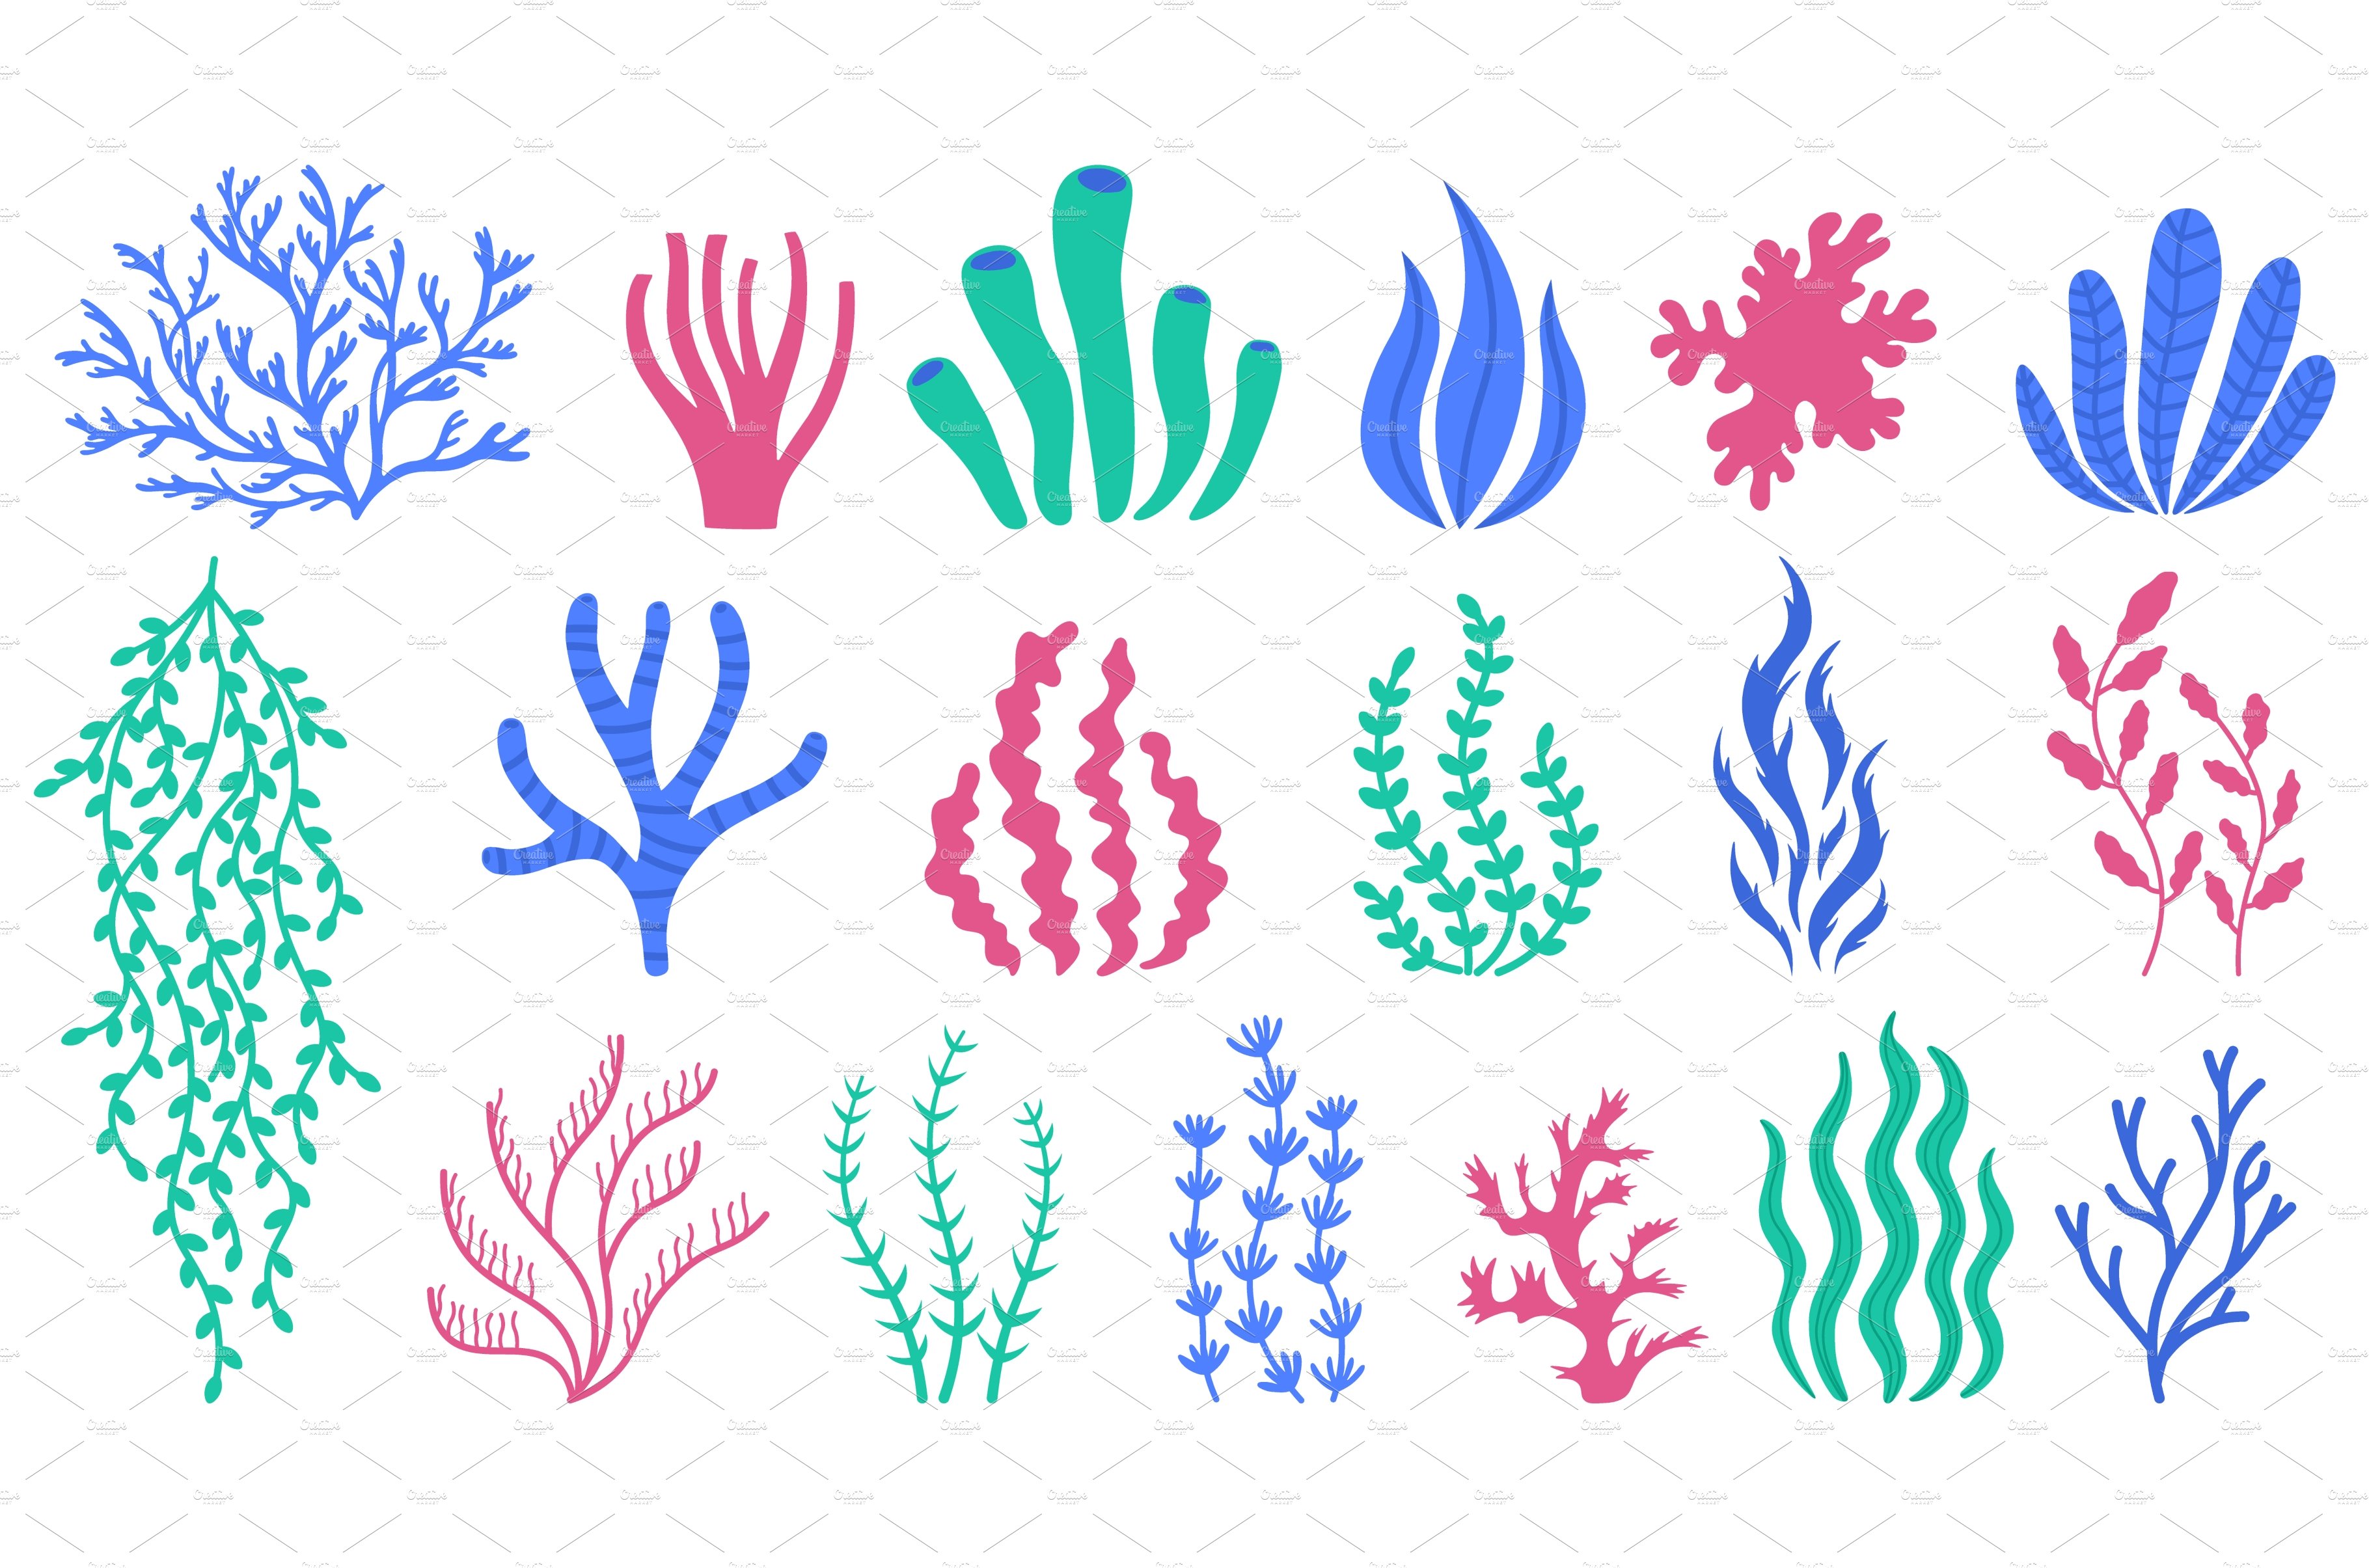 Sea corals. Underwater plants, hand cover image.